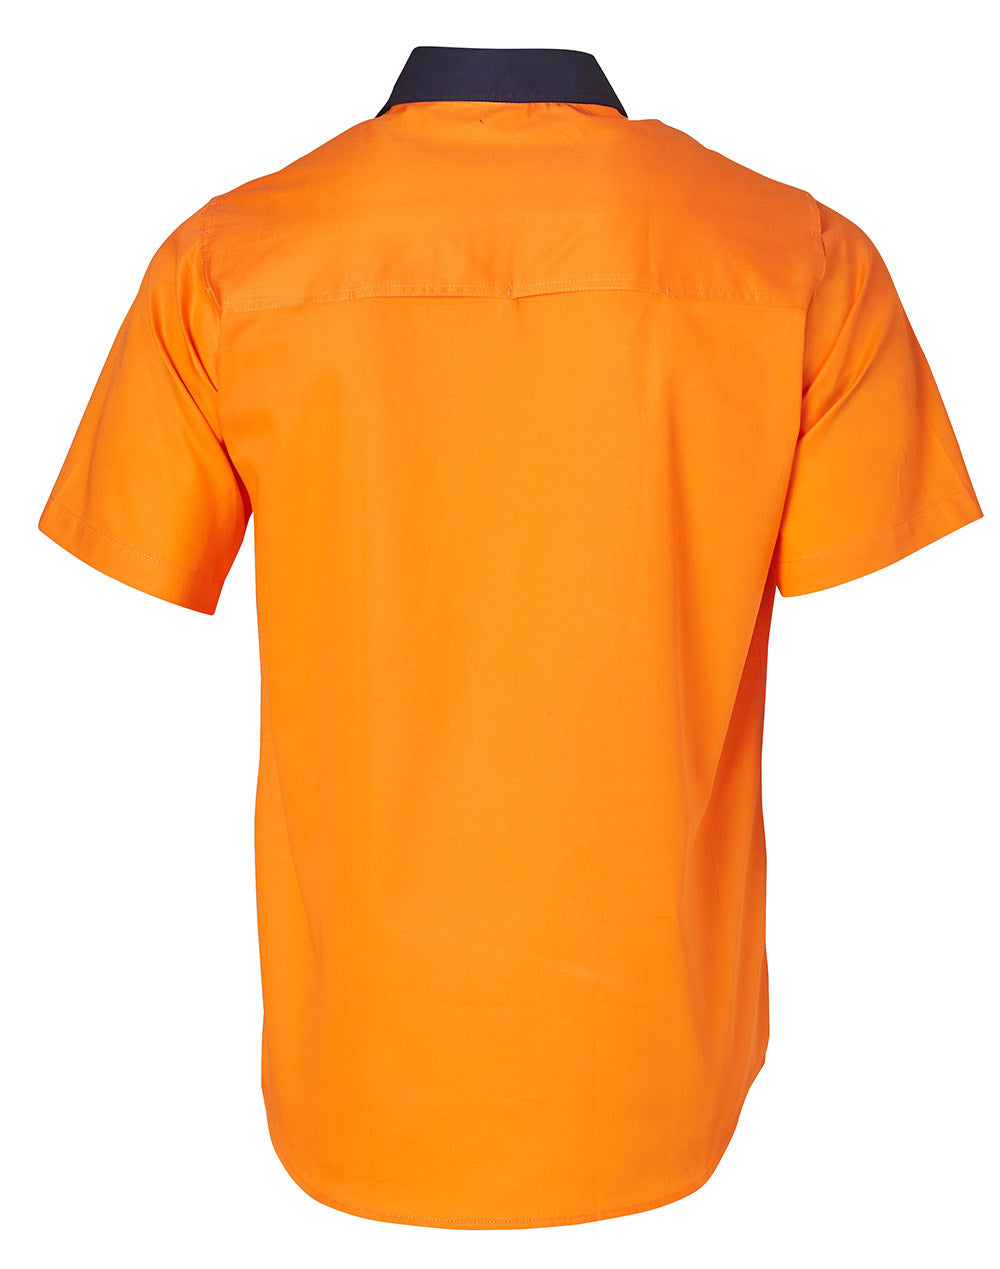 Hi-Vis Cool-Breeze S/S Safety Shirt